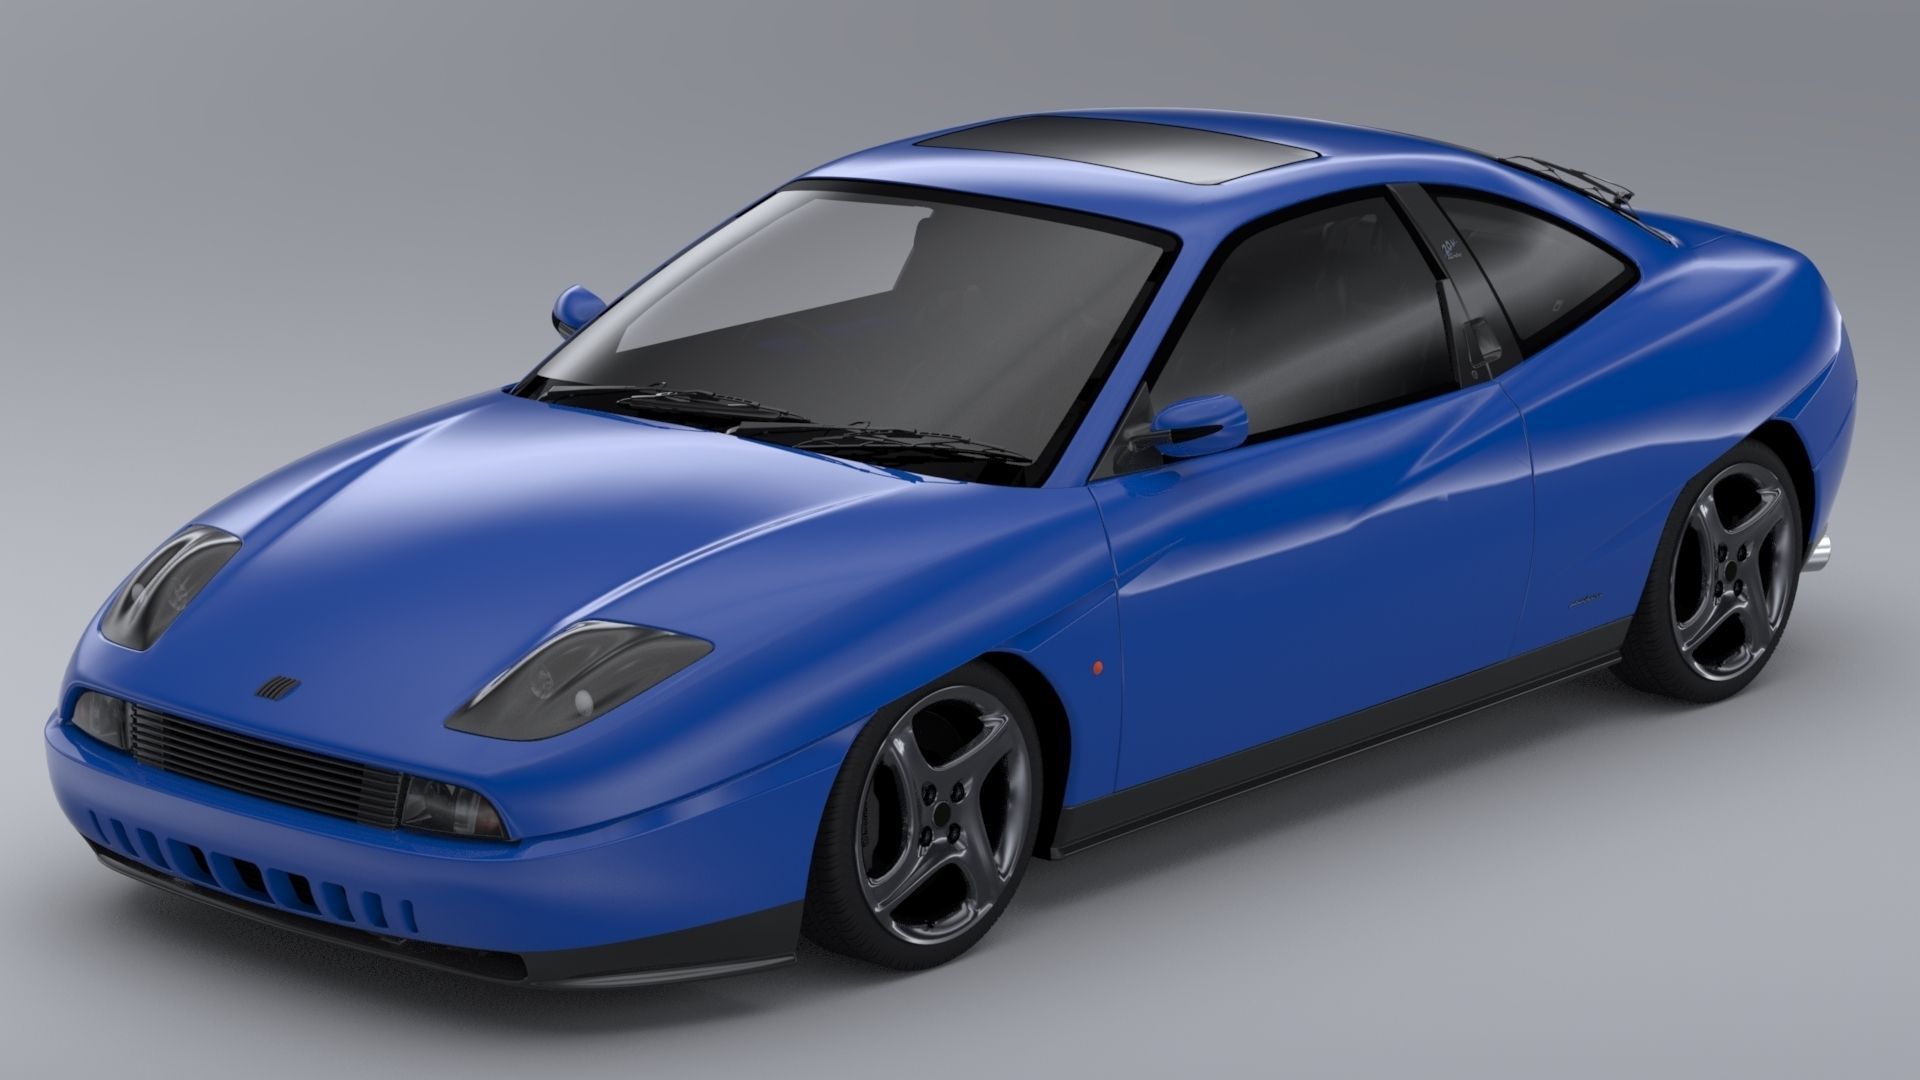 fiat-coupe-20v-turbo-2000-sports-car-3d-model-max-obj-mtl.jpg